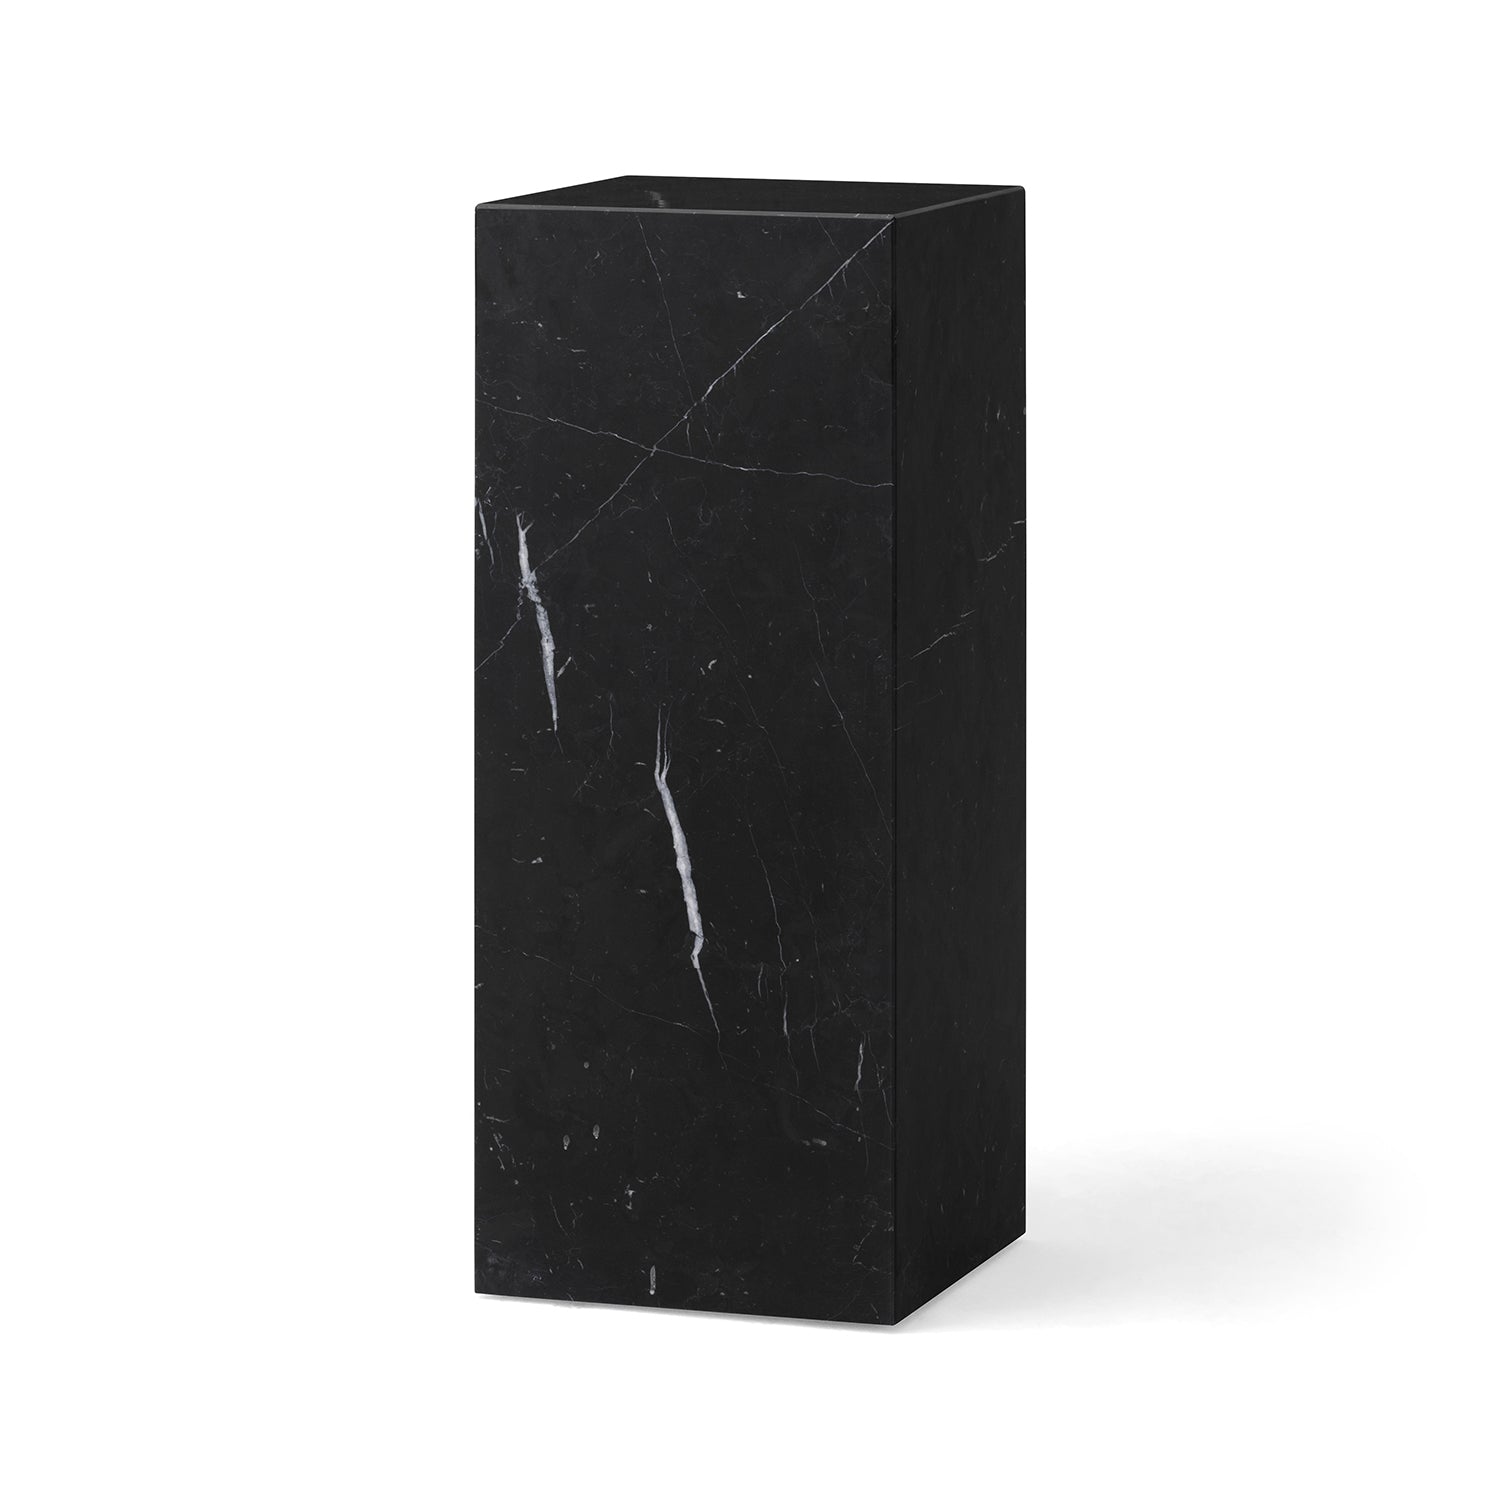 Plinth Pedestal - The Design Choice